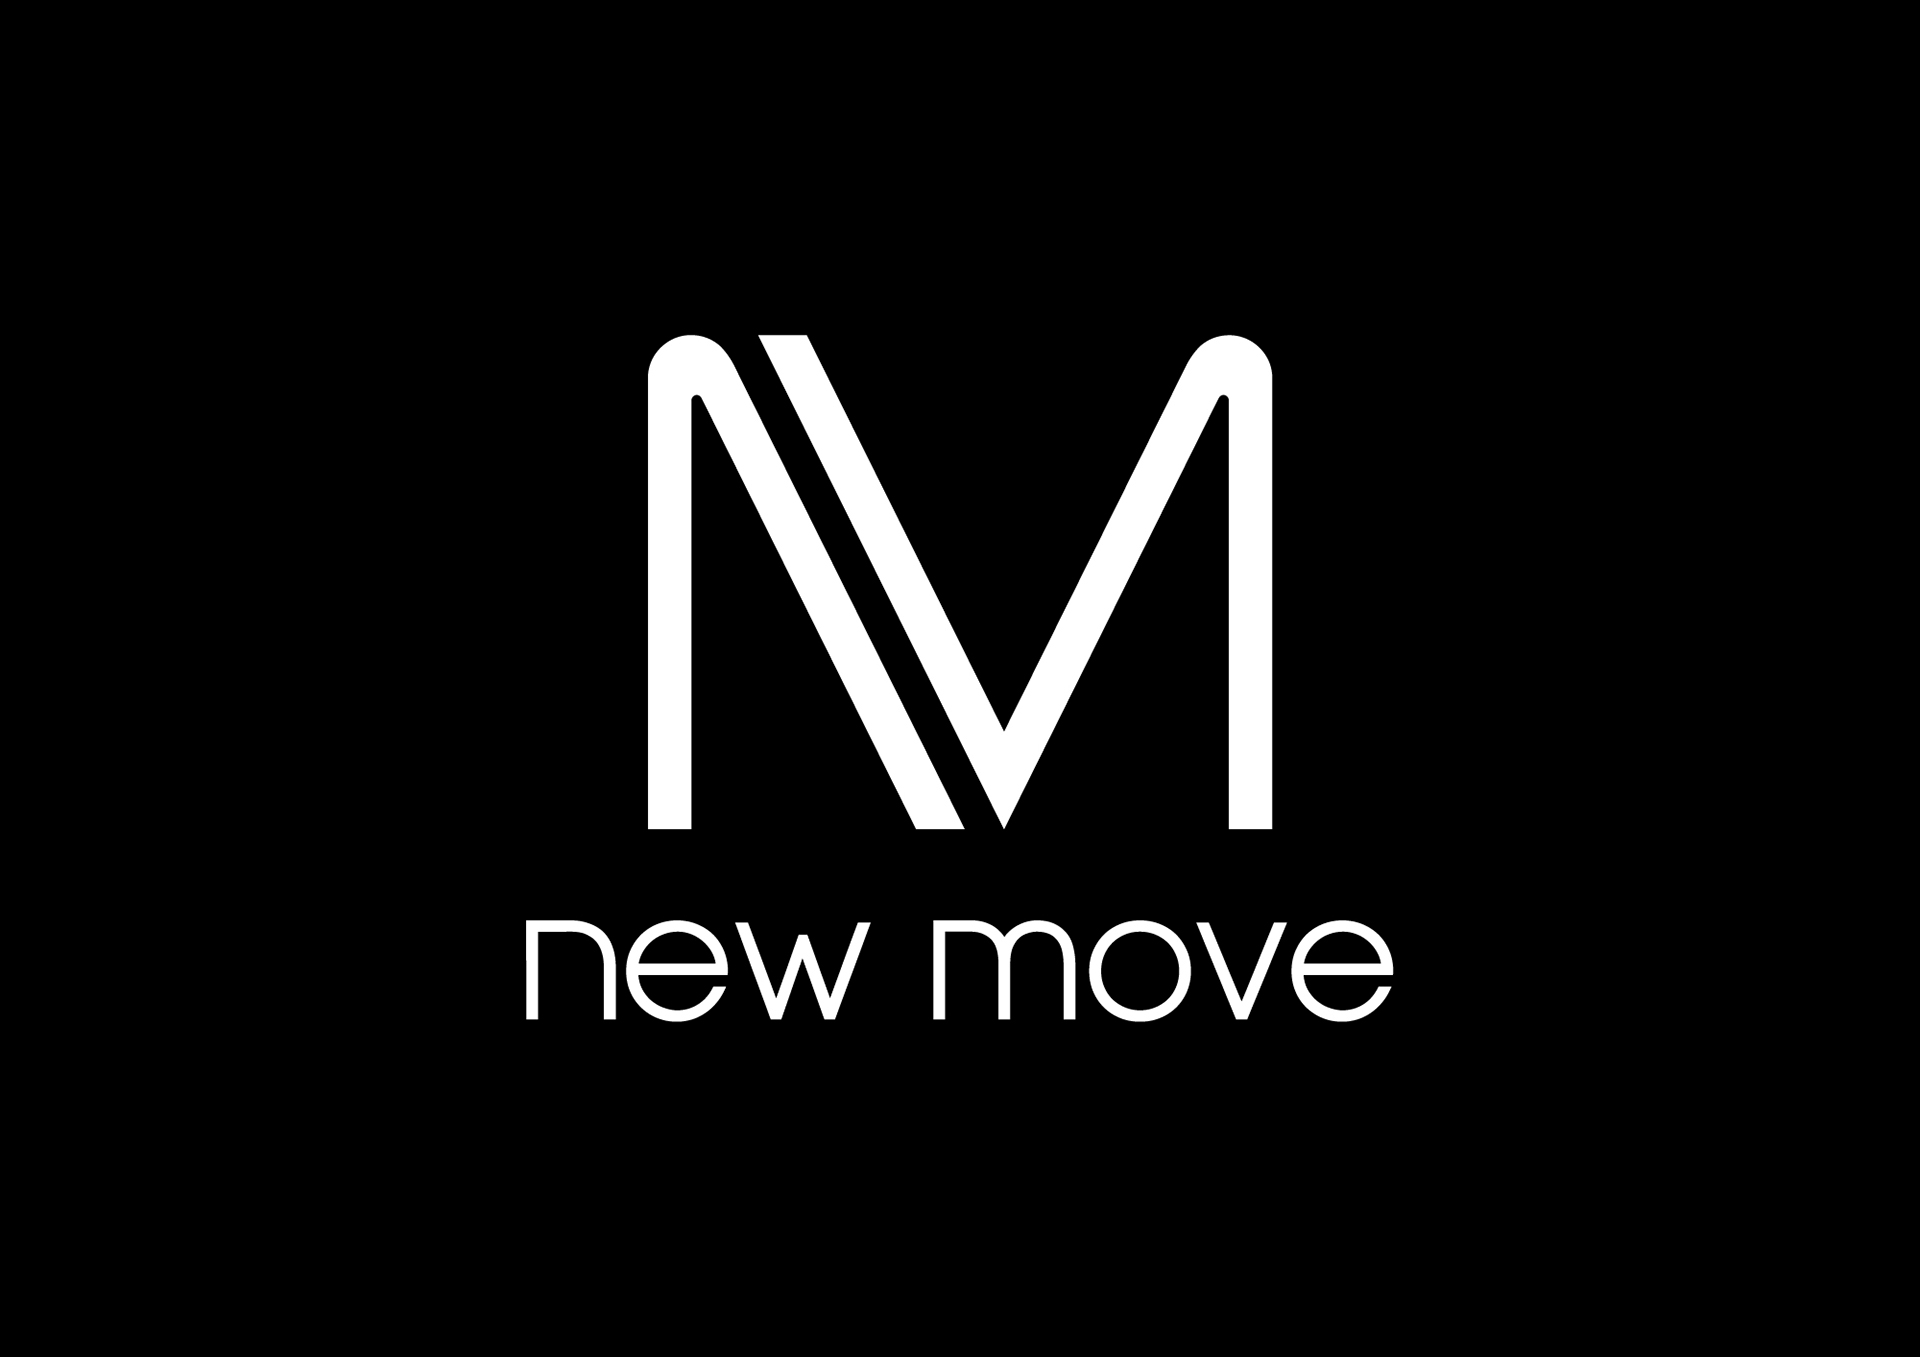 New move. Make new moves